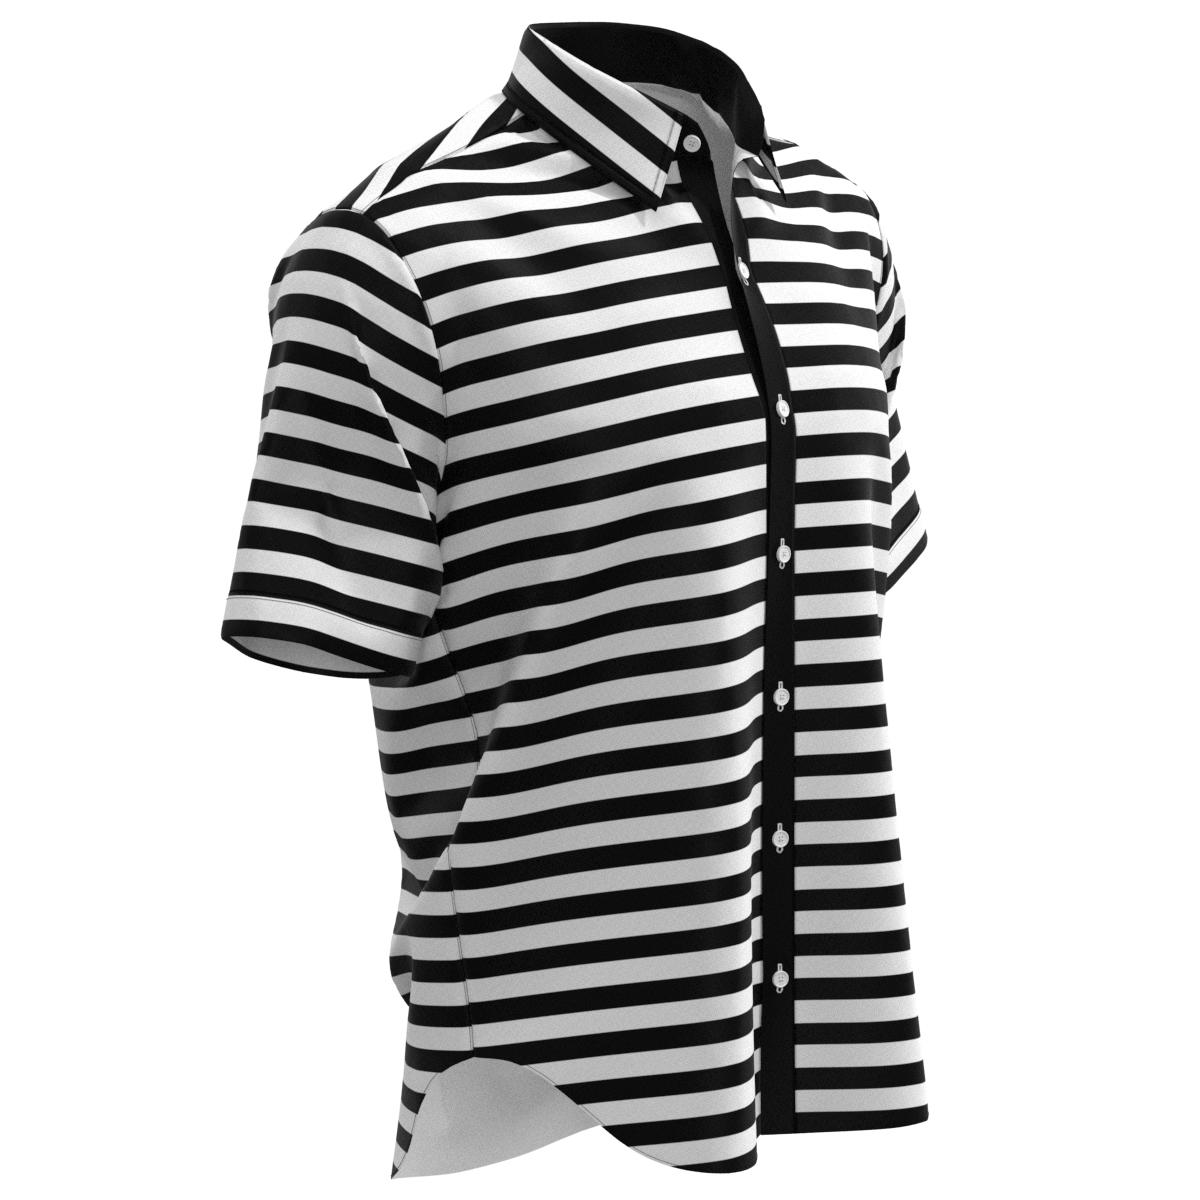 EightyThree XYZ Black & White Horizontal Stripes Mens Buttons Shirt XS-3XL 